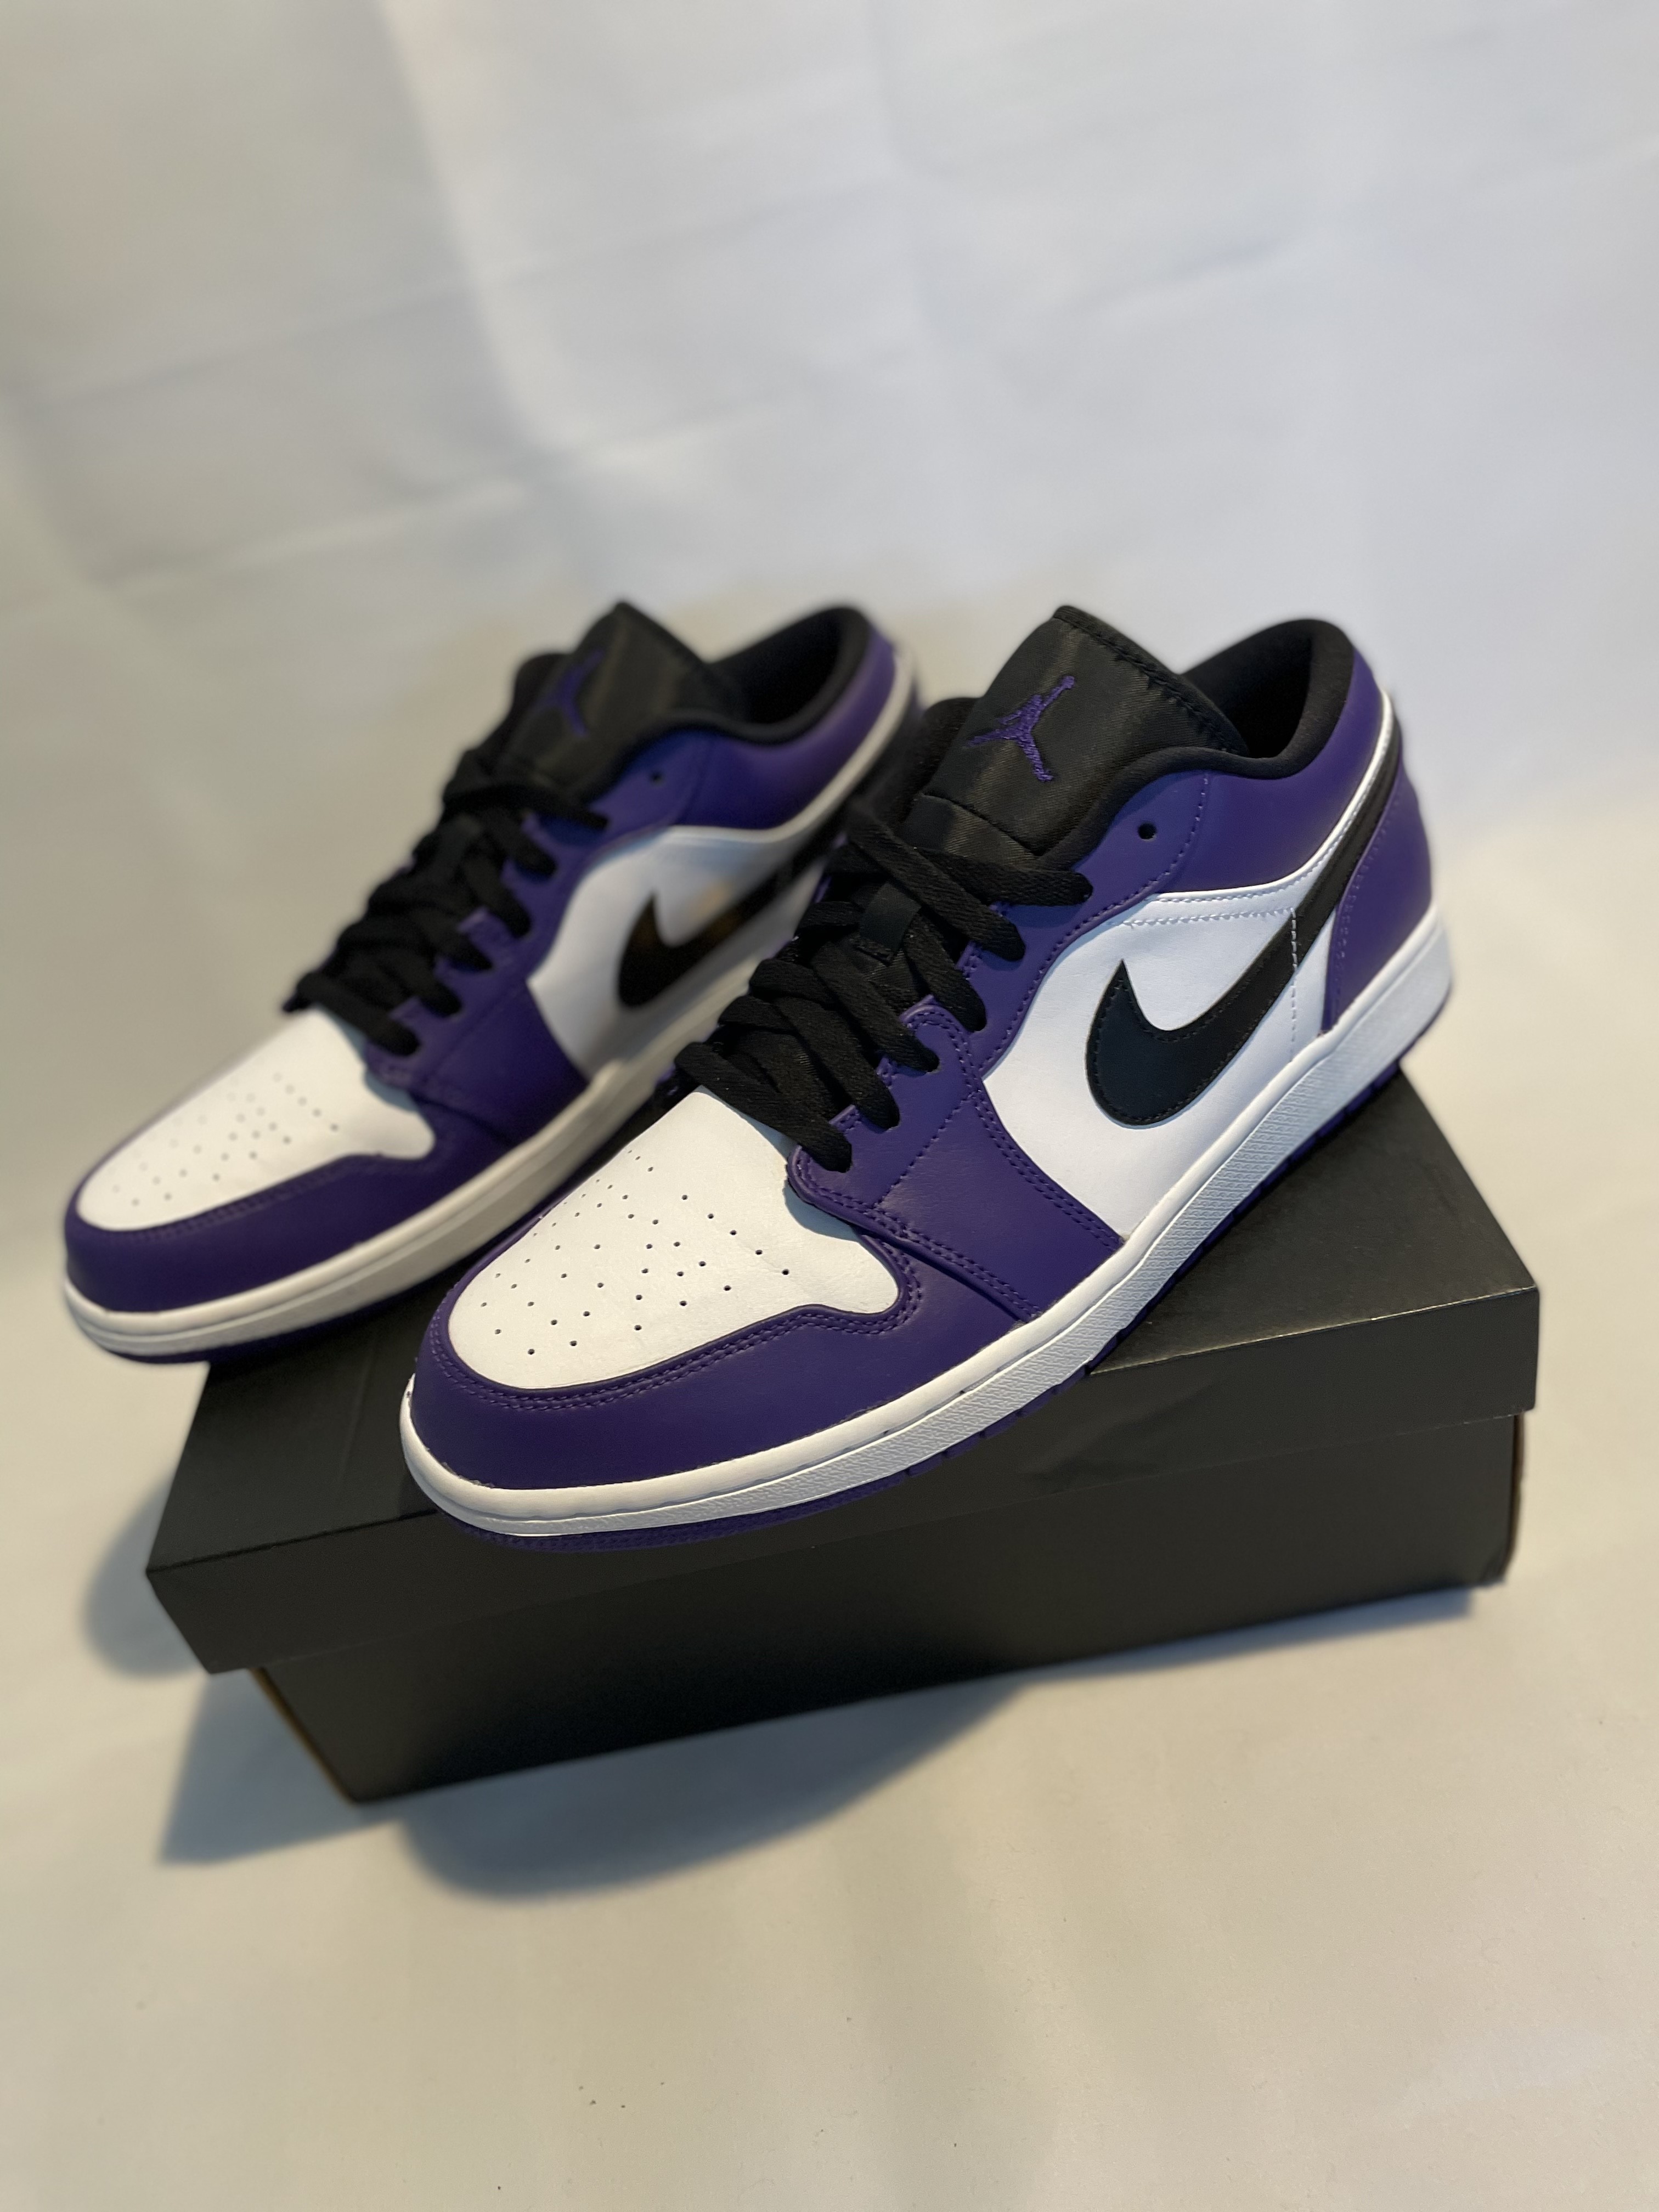 Jordan 1 low ‘court purple’ - 1